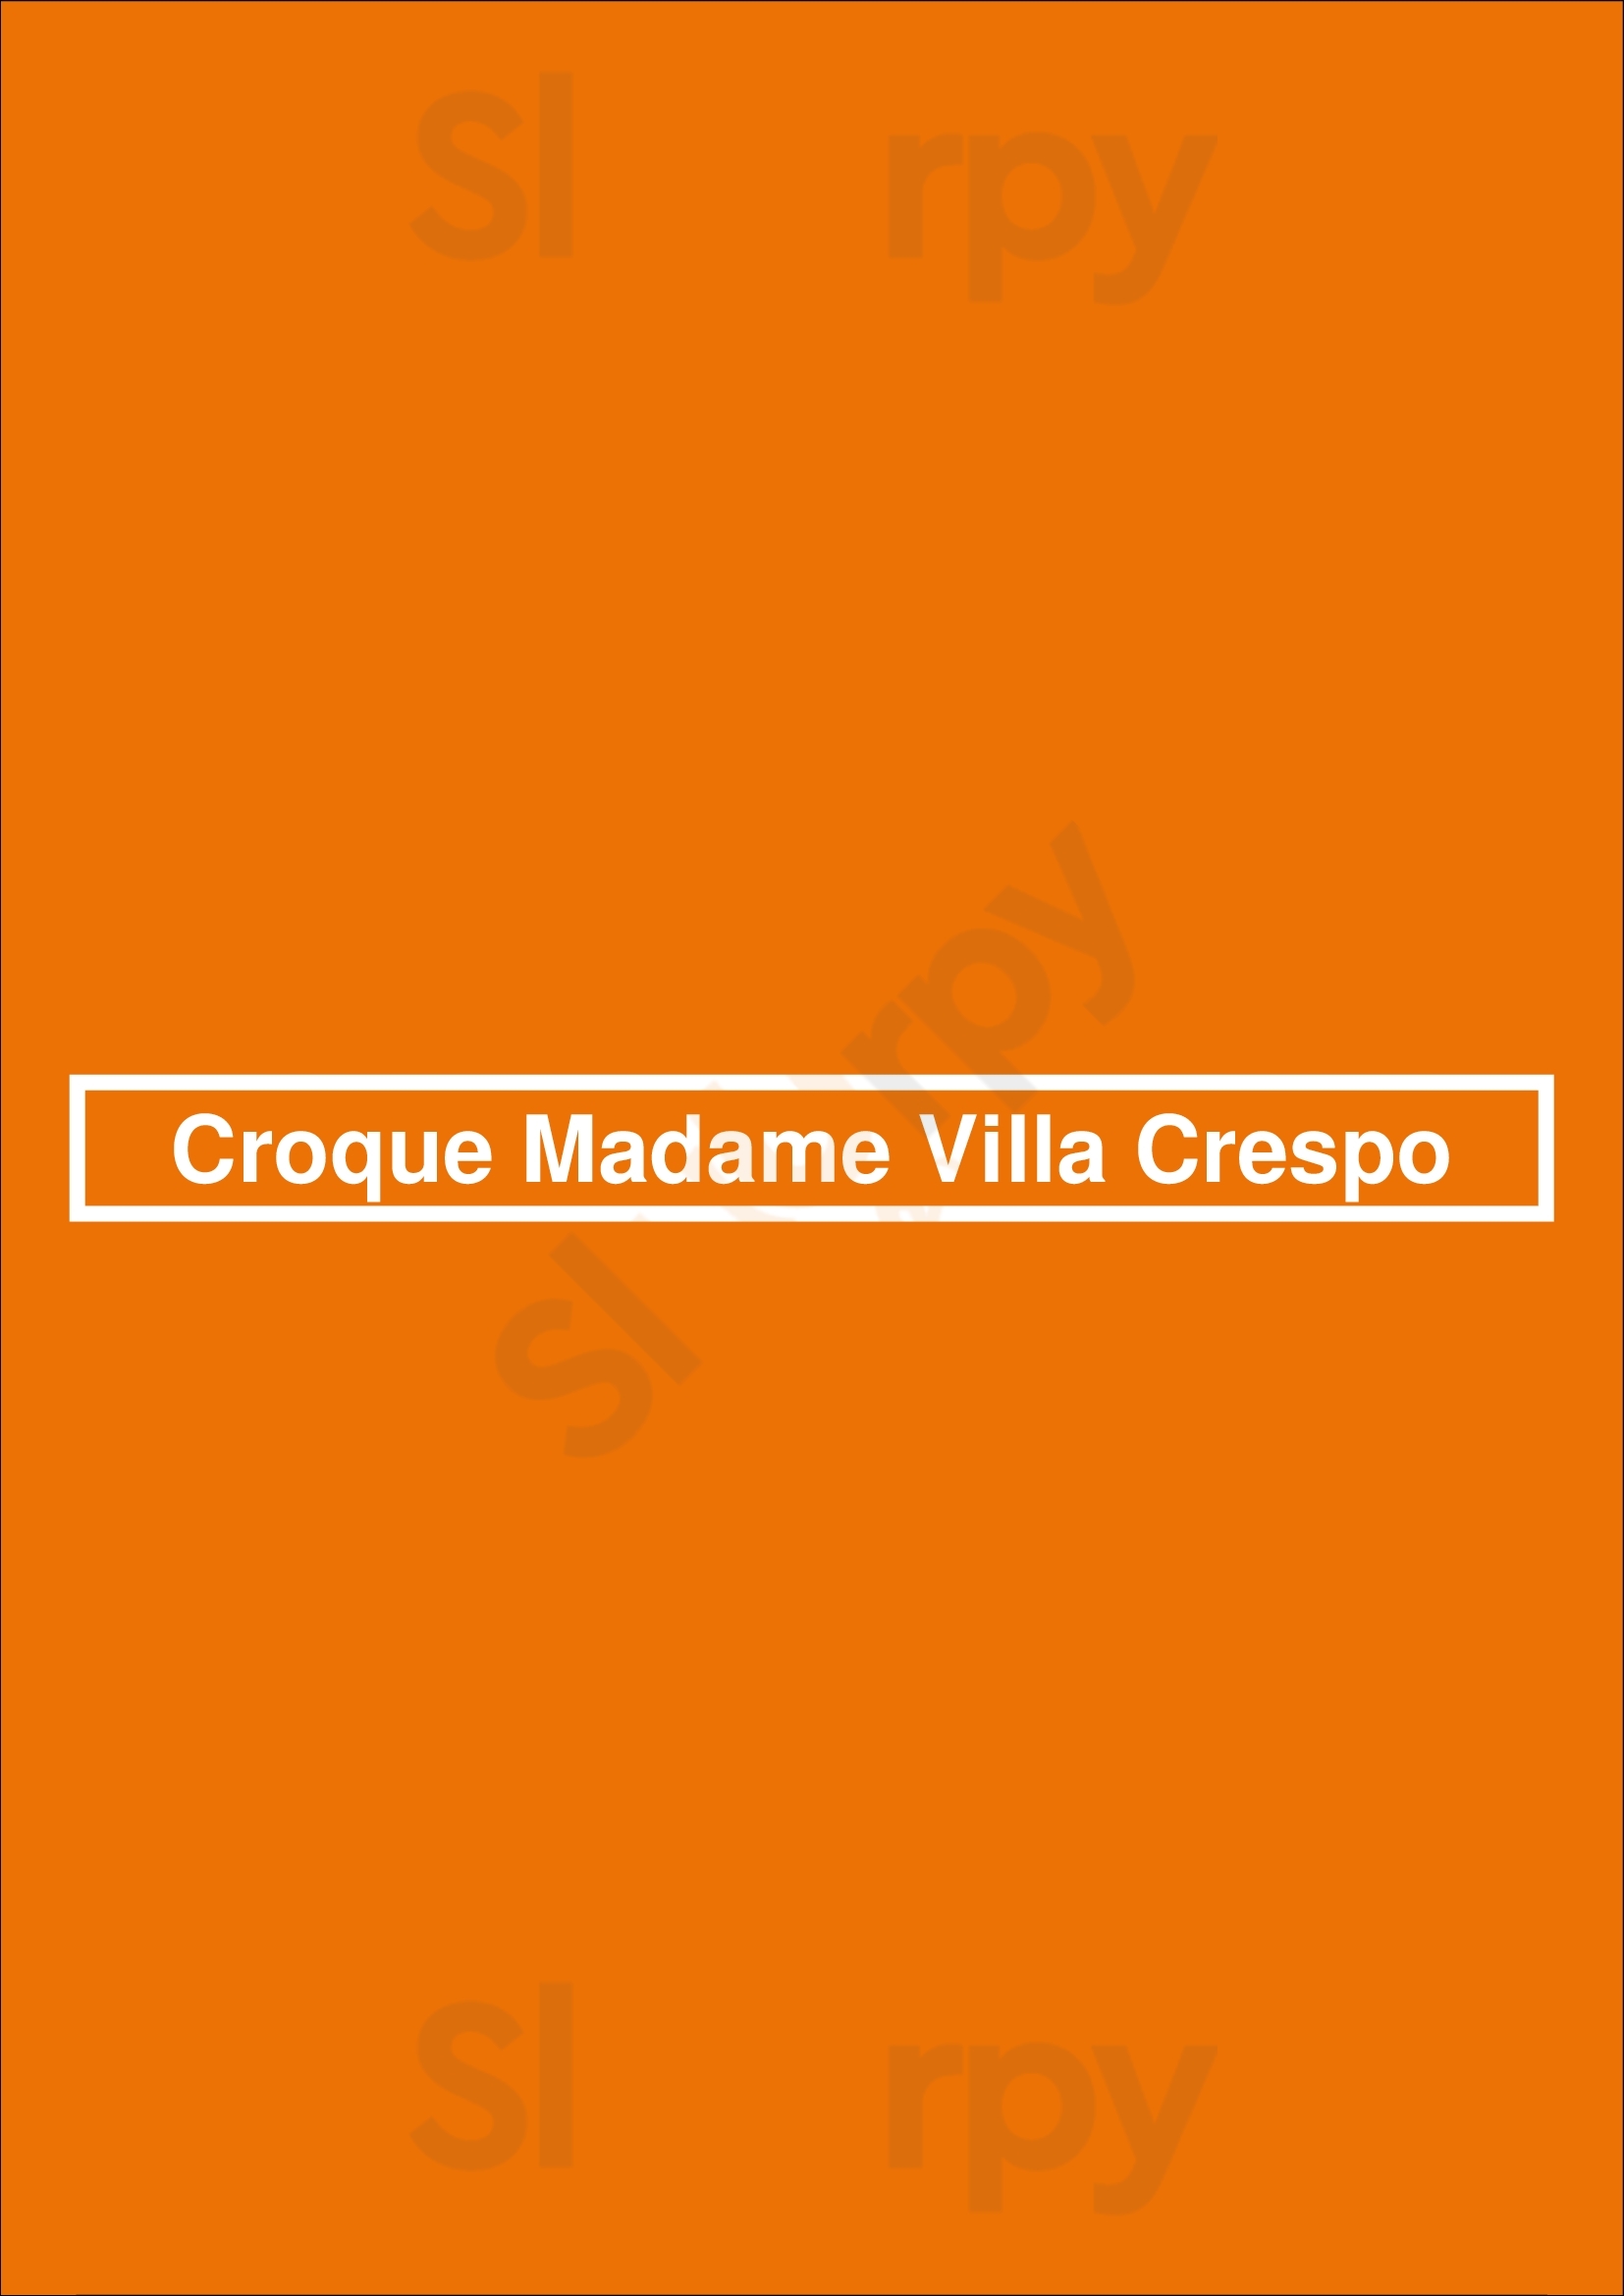 Croque Madame Villa Crespo Buenos Aires Menu - 1